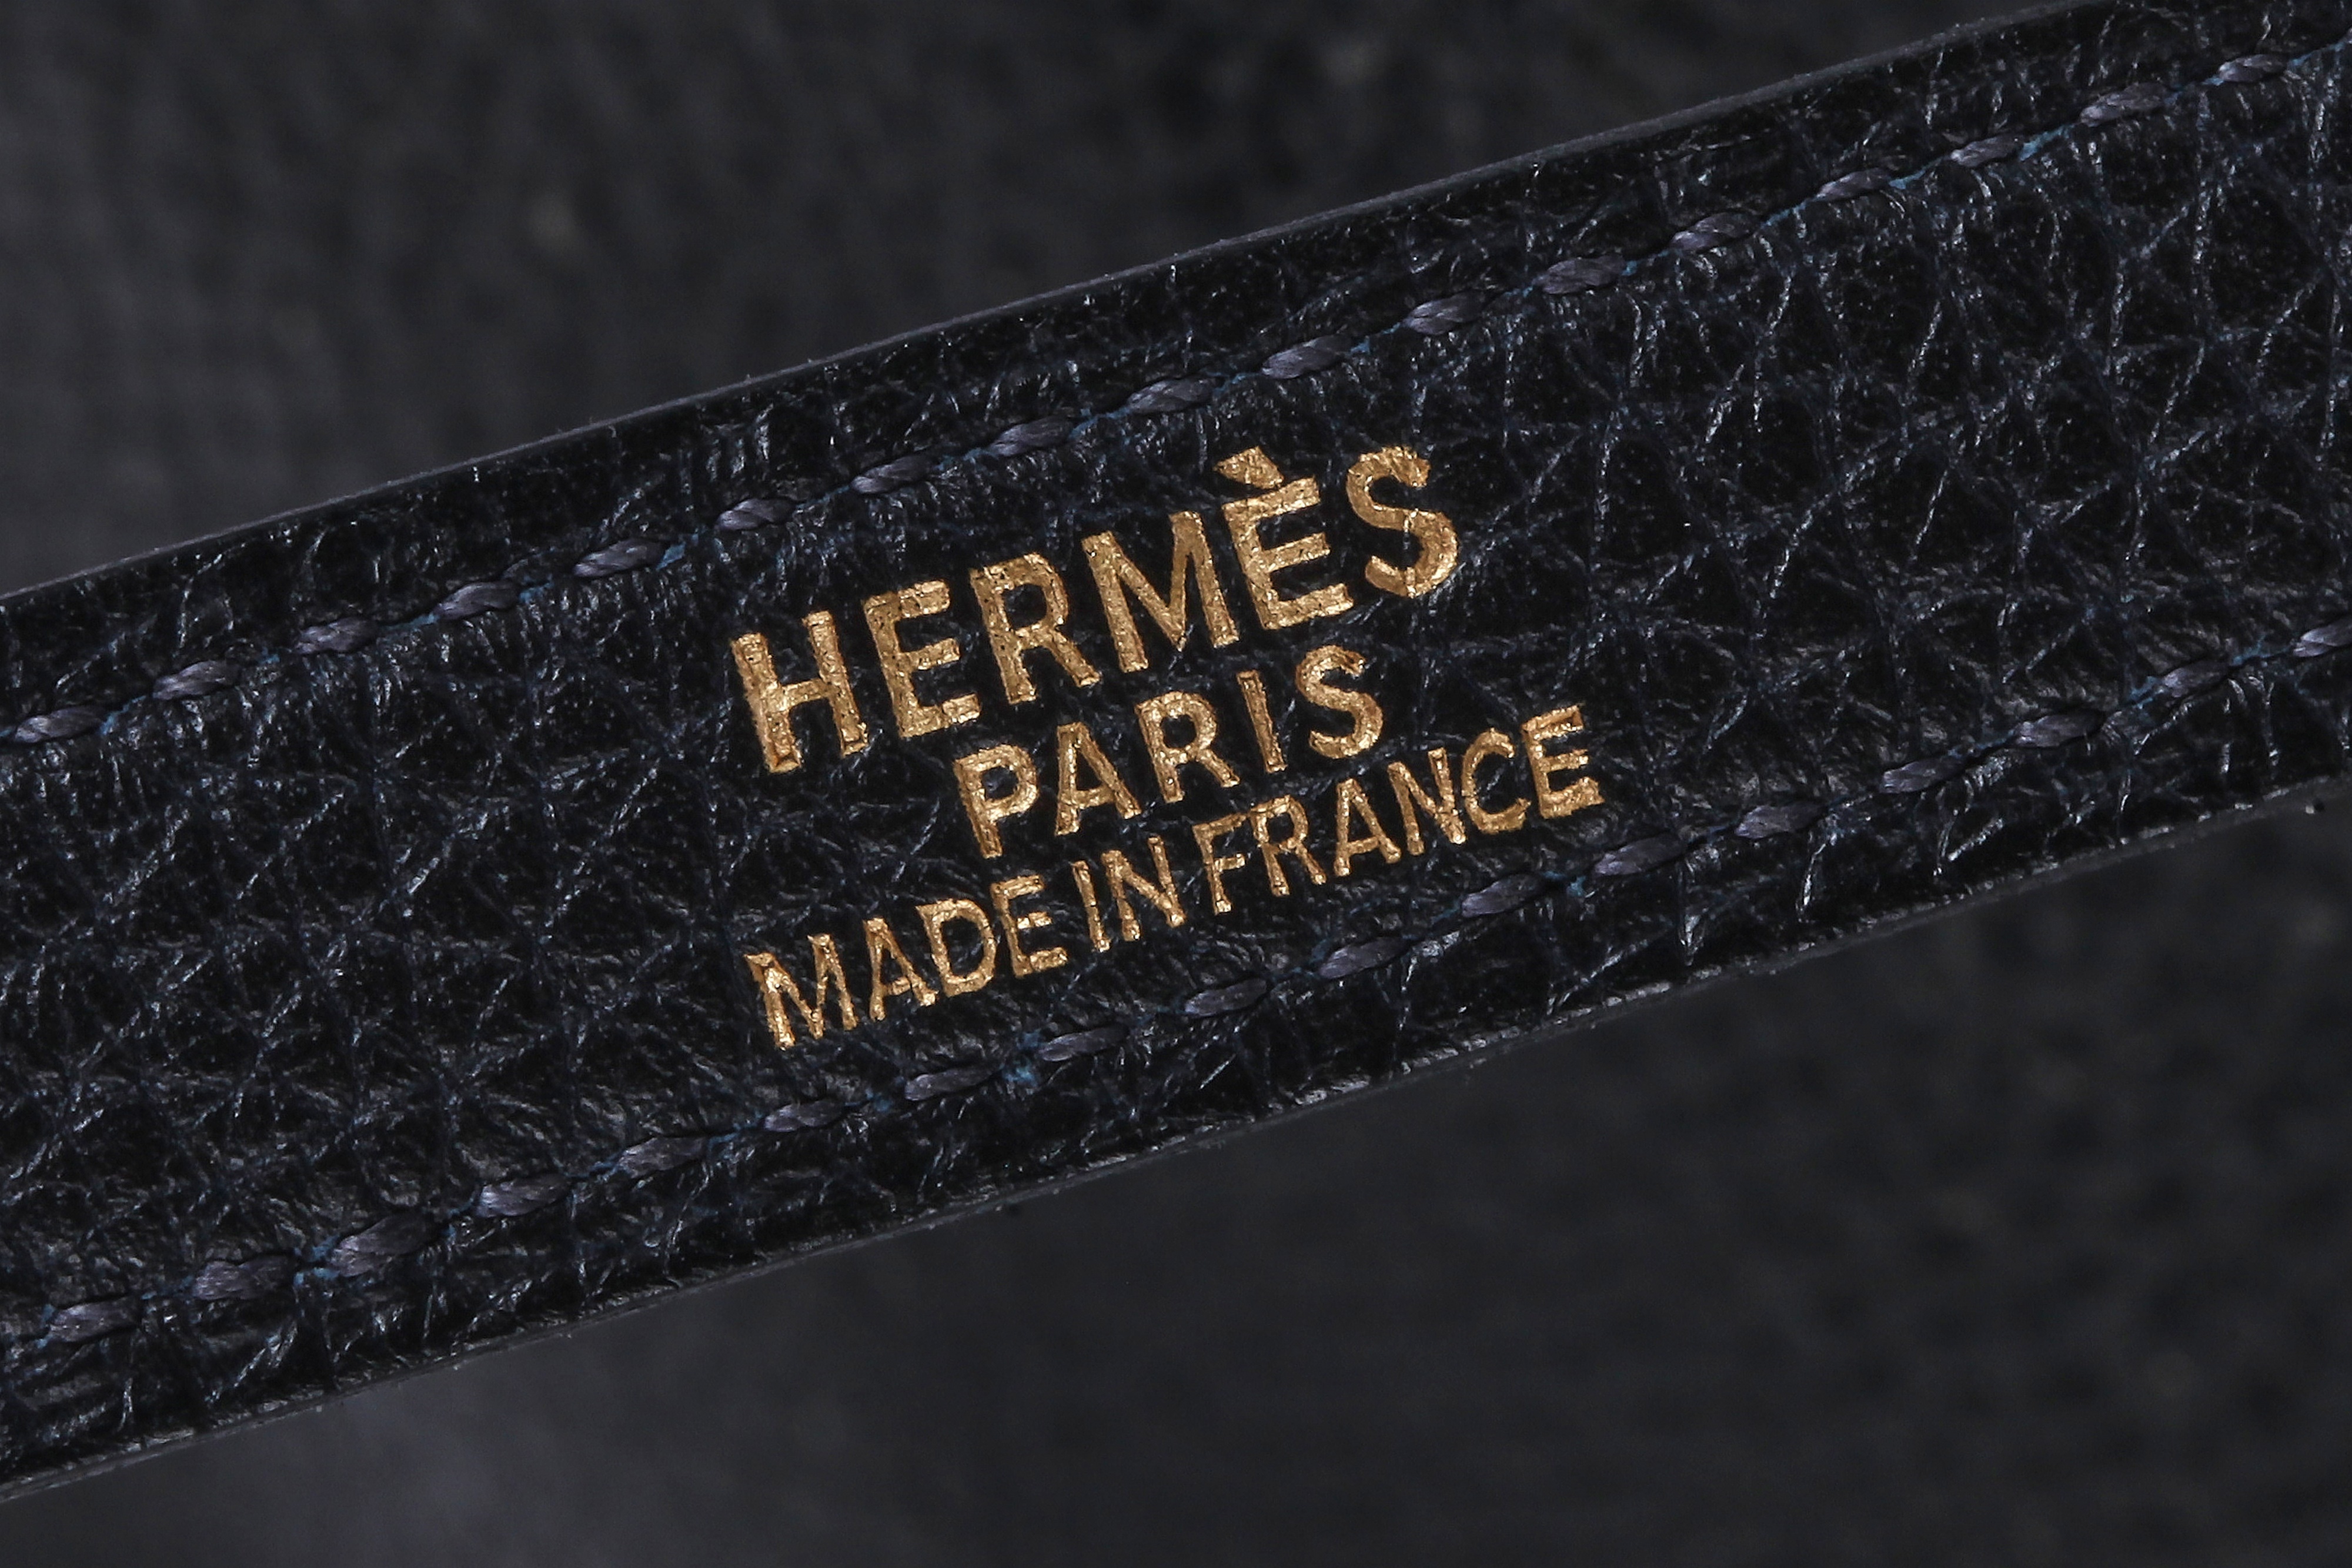 Lot 9 - An Hermès black Fjord leather Kelly bag, 1995